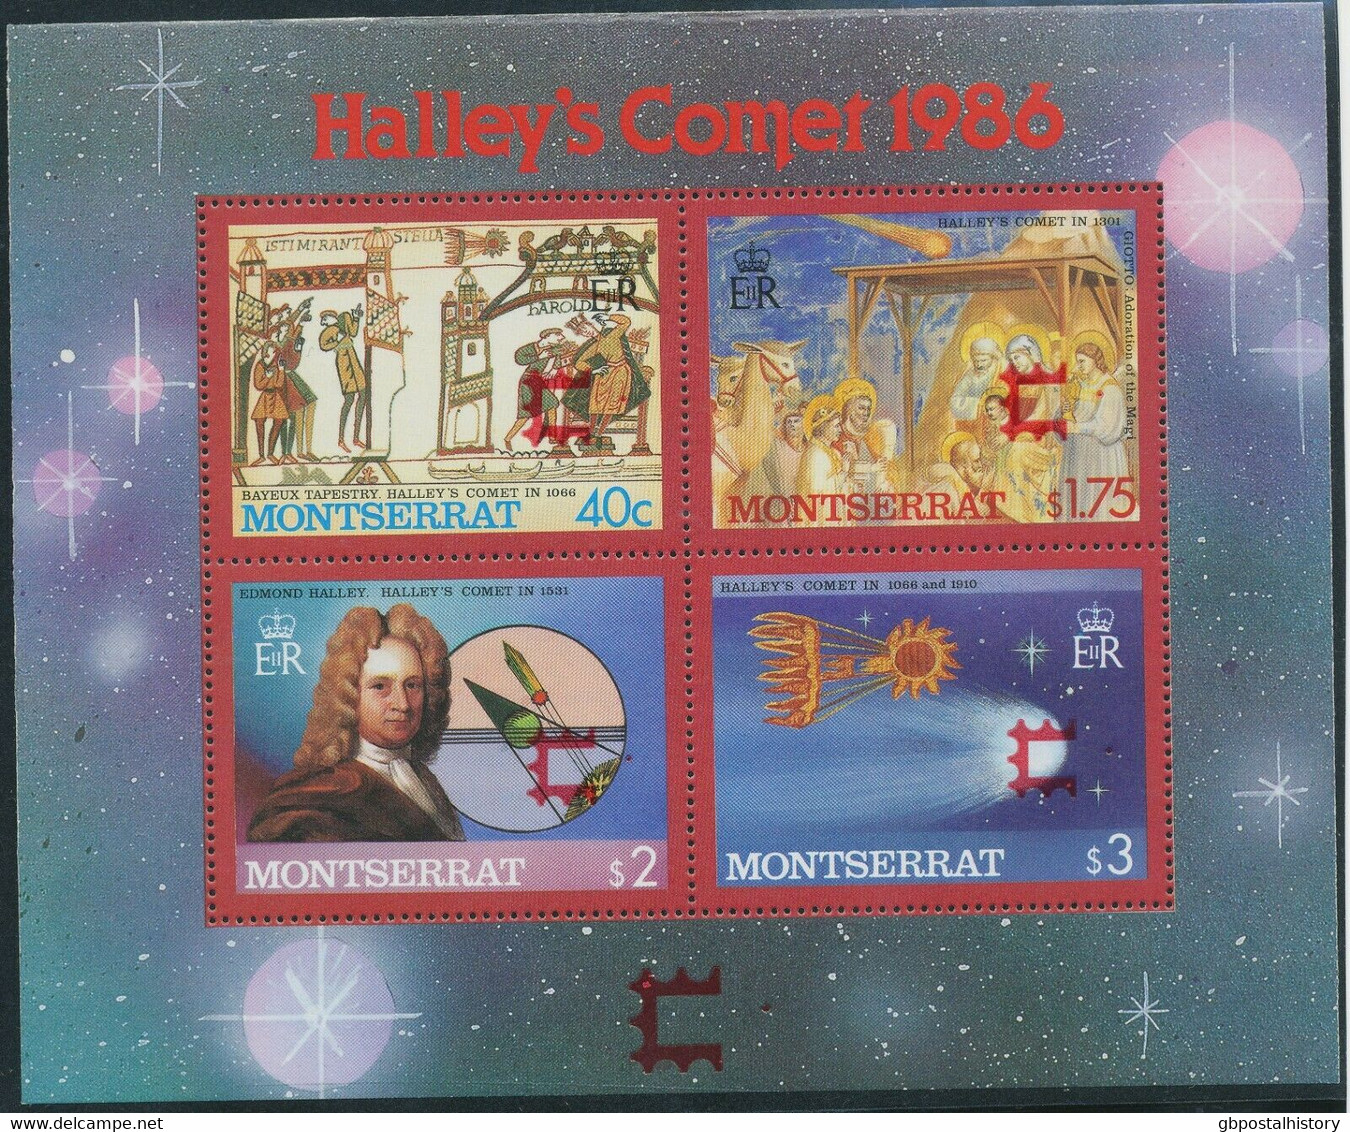 MONTSERRAT 1987 Halley's Comet CAPEX '87 U/M MS VARIETY MISSING BLACK OVERPRINT - Montserrat